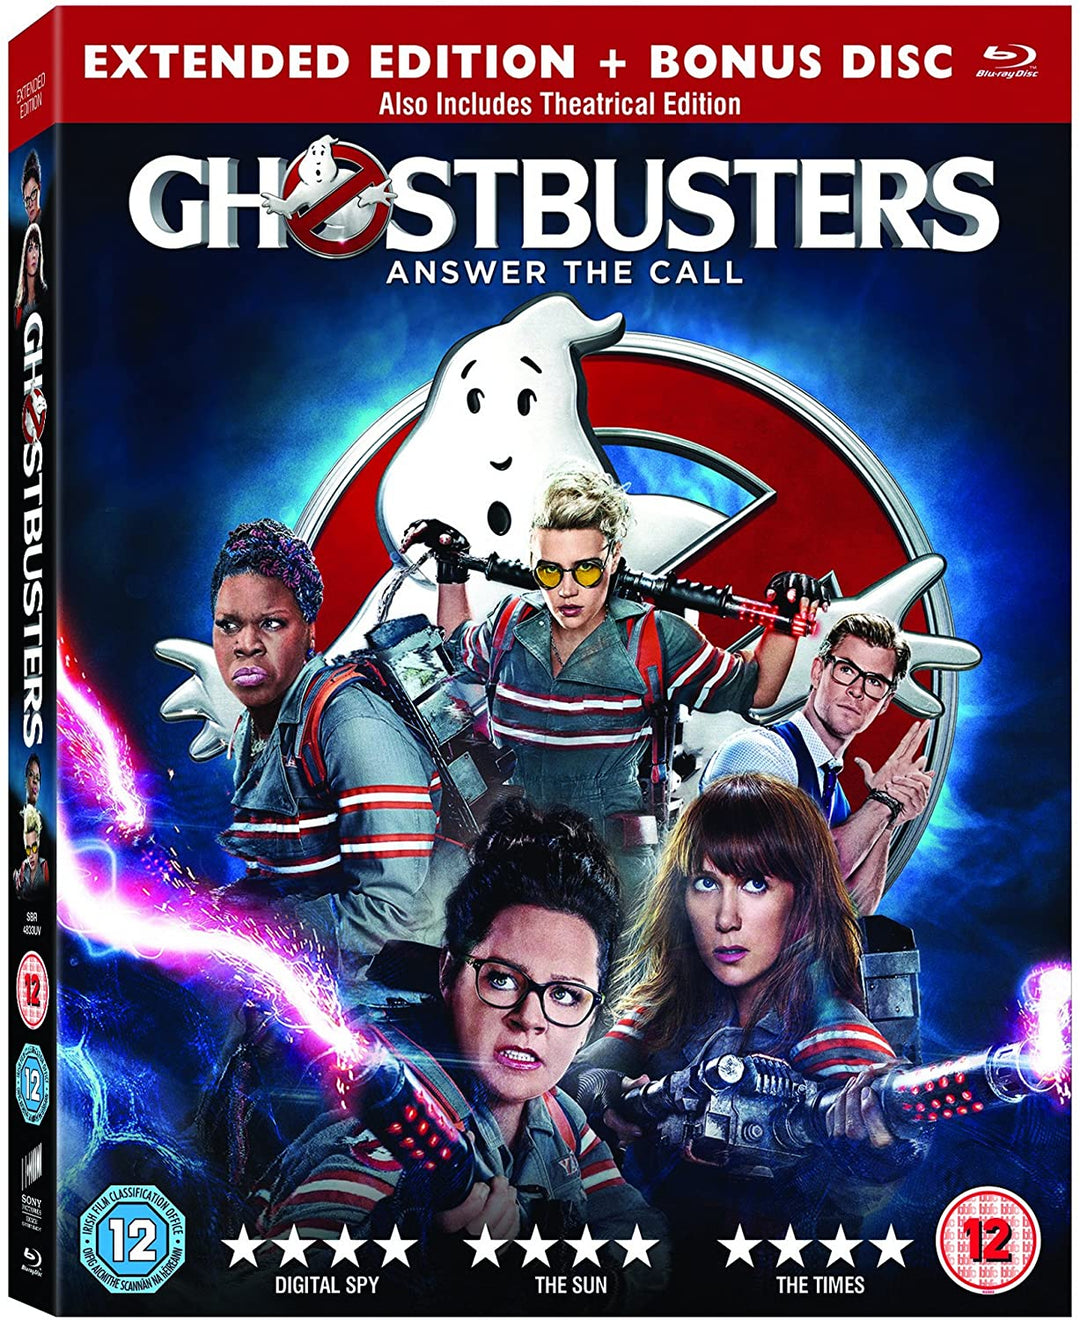 Ghostbusters [Blu-ray] [2016] [Région gratuite]